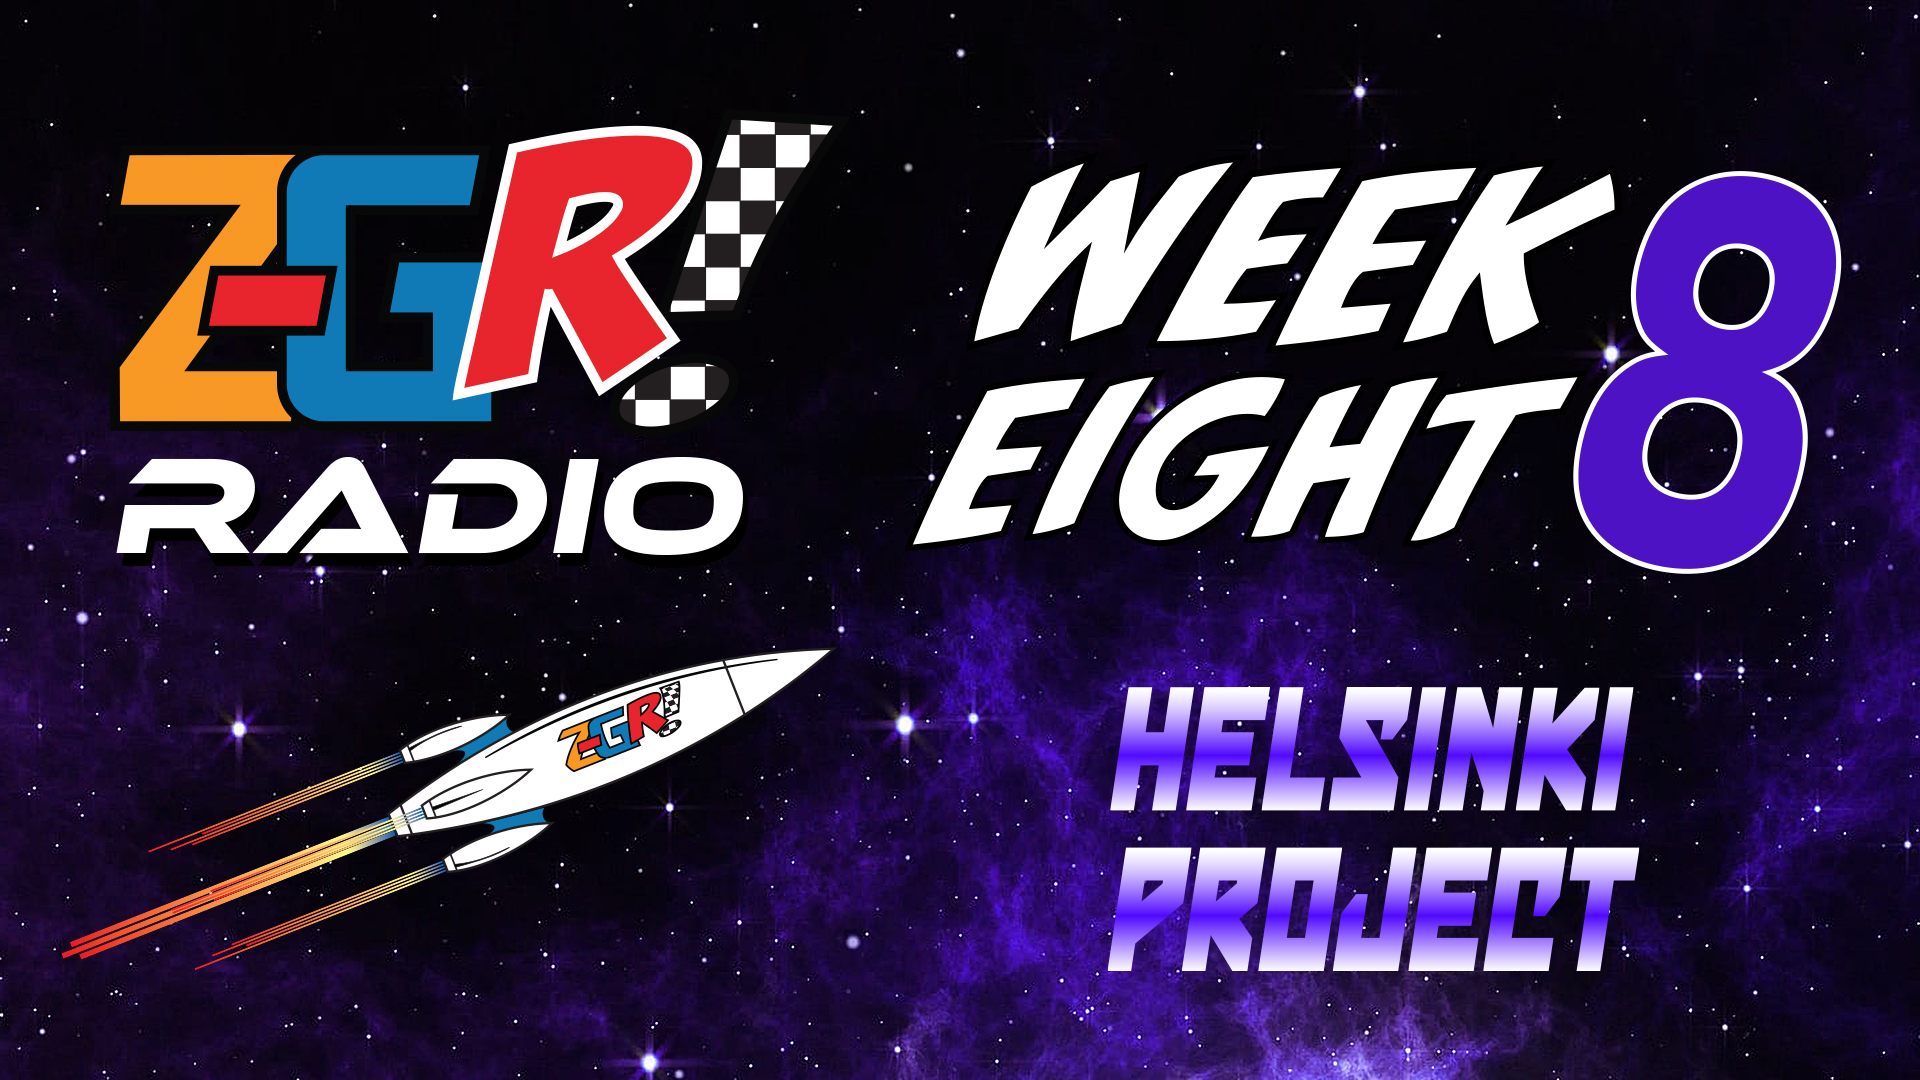 Z-GR! Radio Week 8 Logo